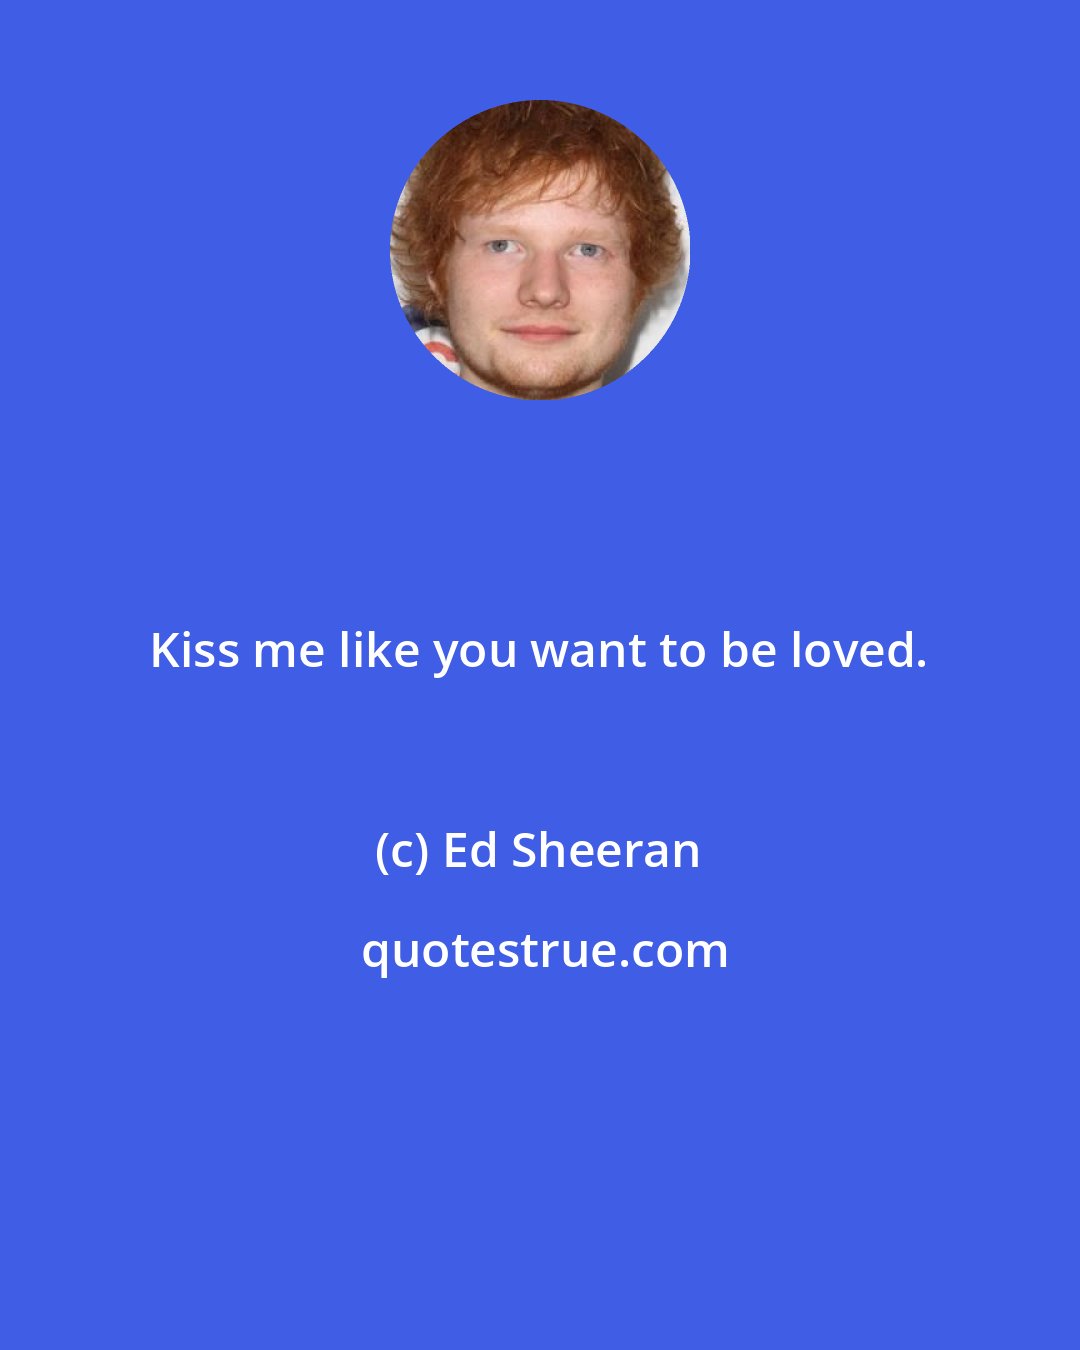 Ed Sheeran: Kiss me like you want to be loved.